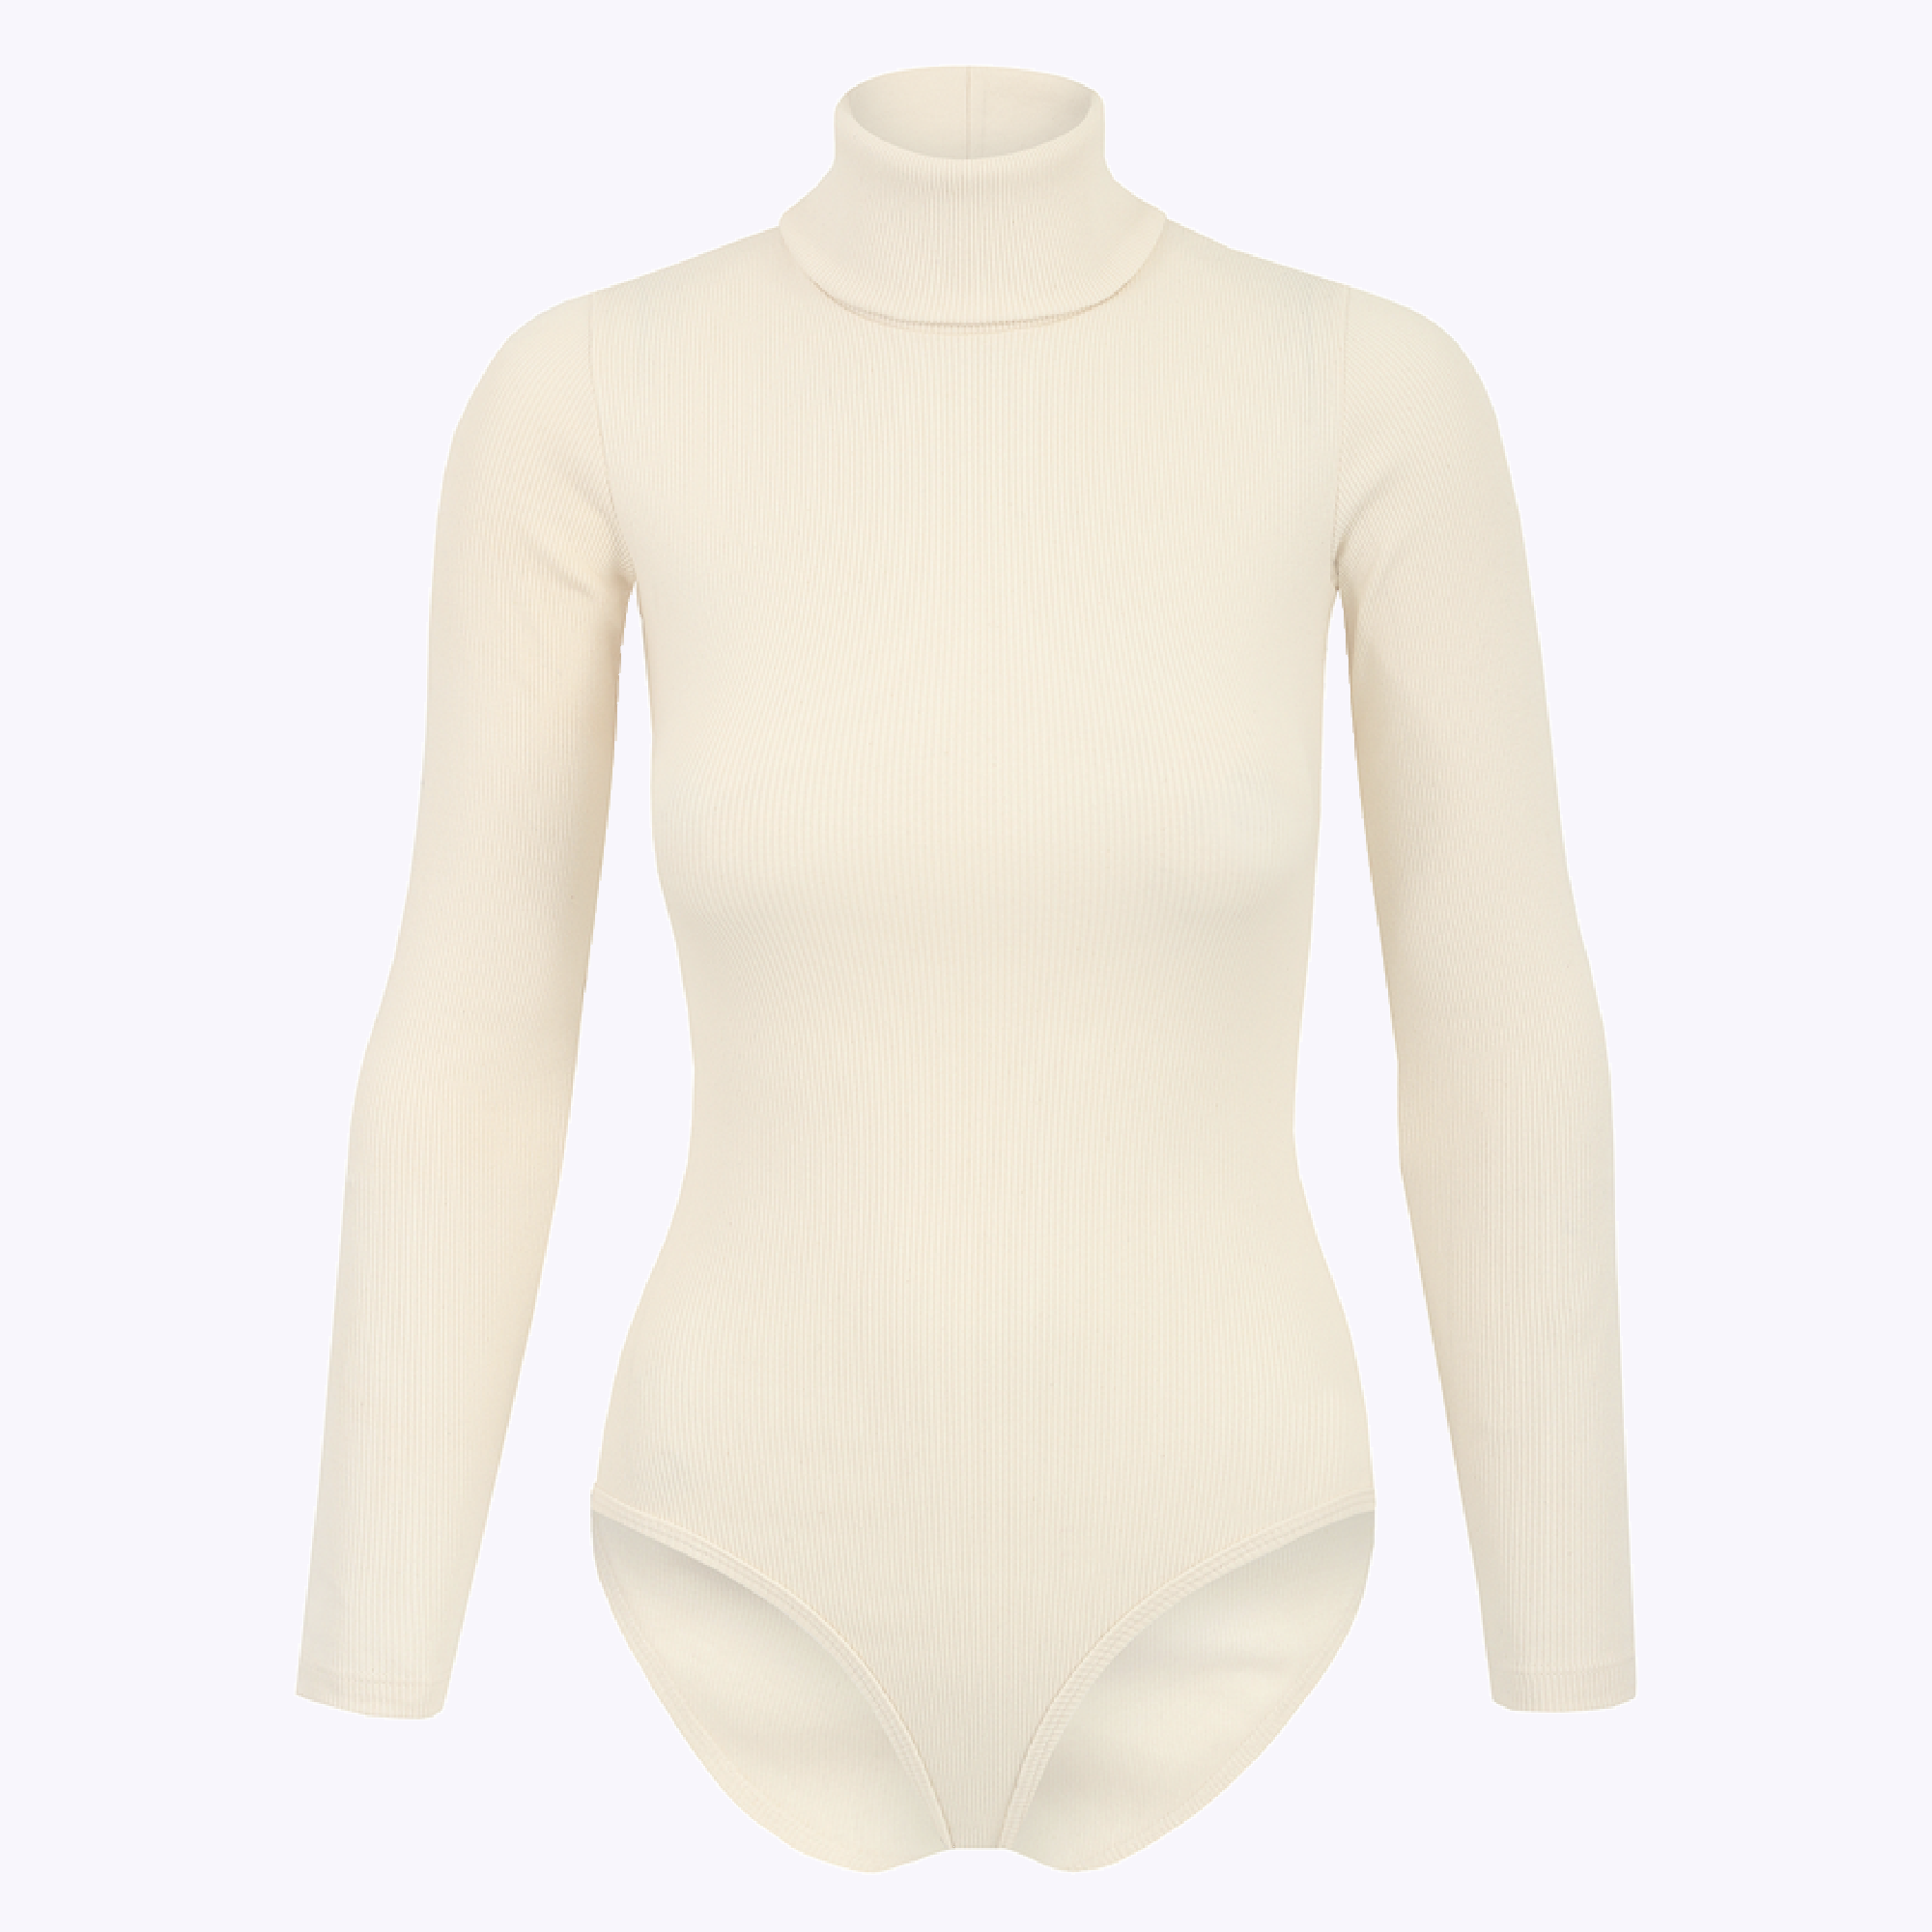 Bodysuit in organic cotton / 01 / 01 / cream white